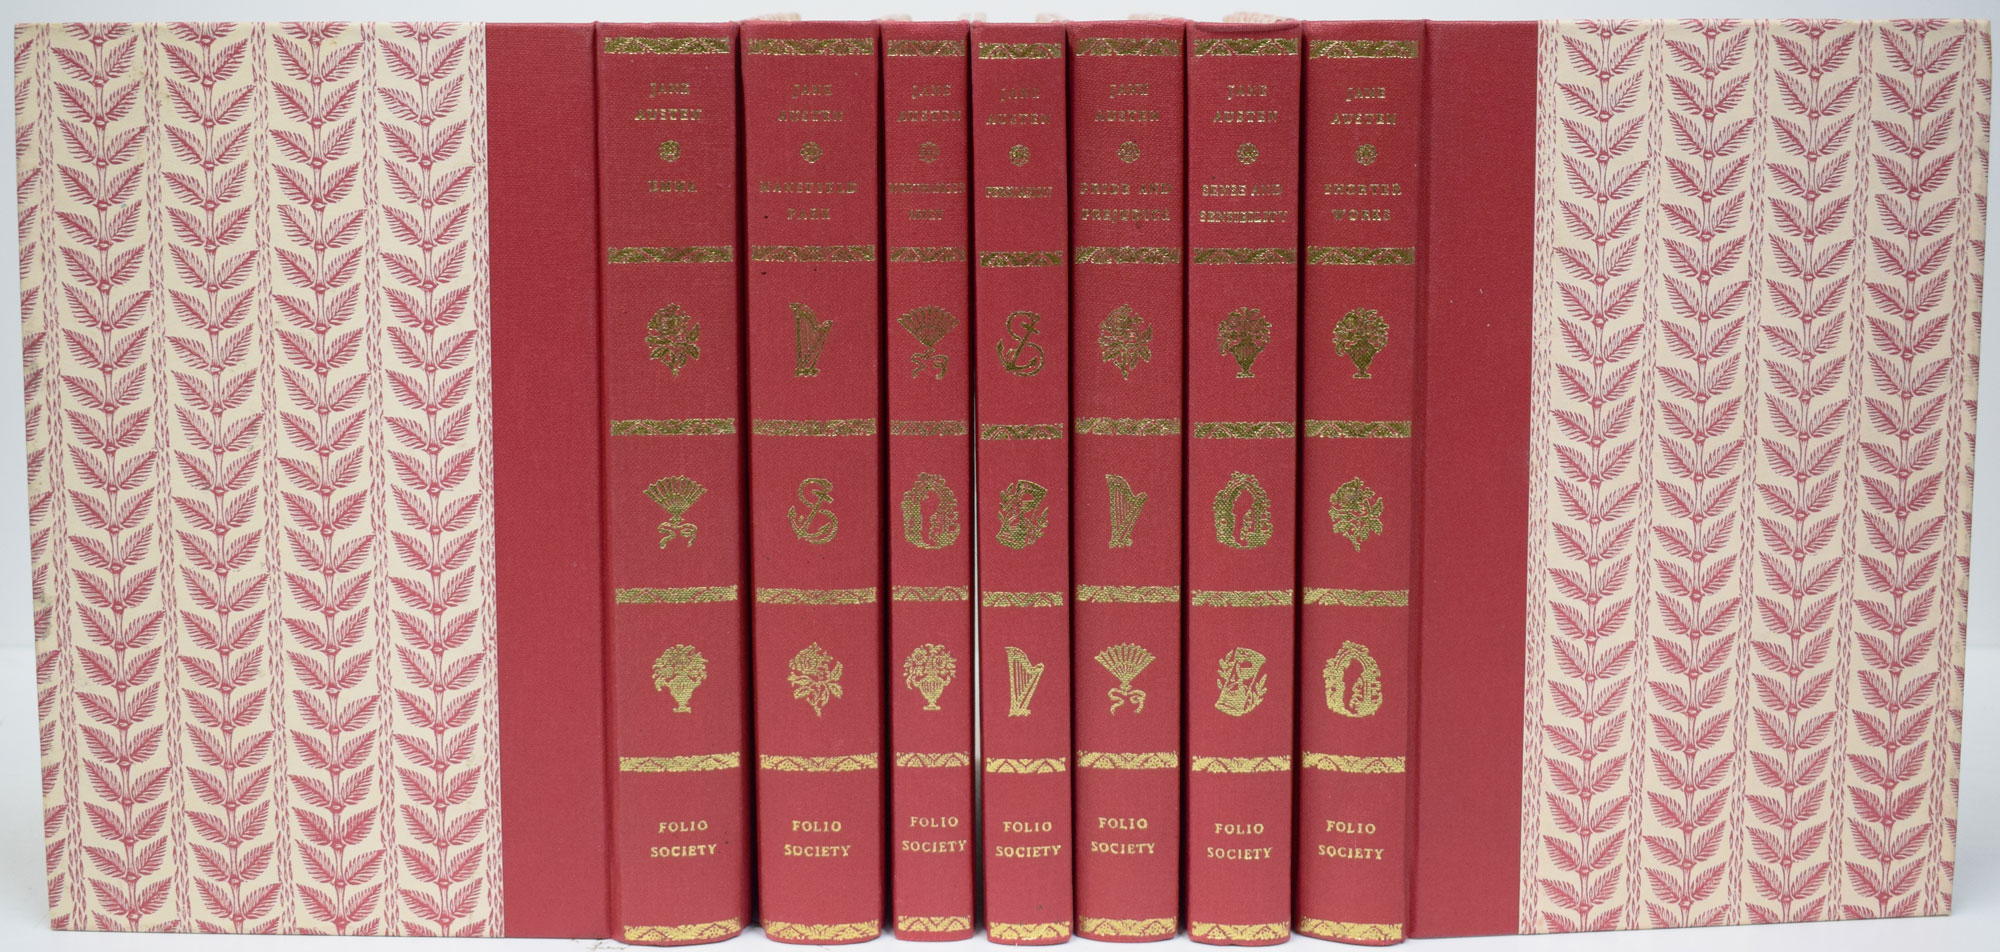 The Works of Jane Austen. 7 volume set. Emma; Mansfield Park; Northanger Abbey; Persuasion; Pride and Prejudice; Sense and Sensibility; Shorter Works. 1989.